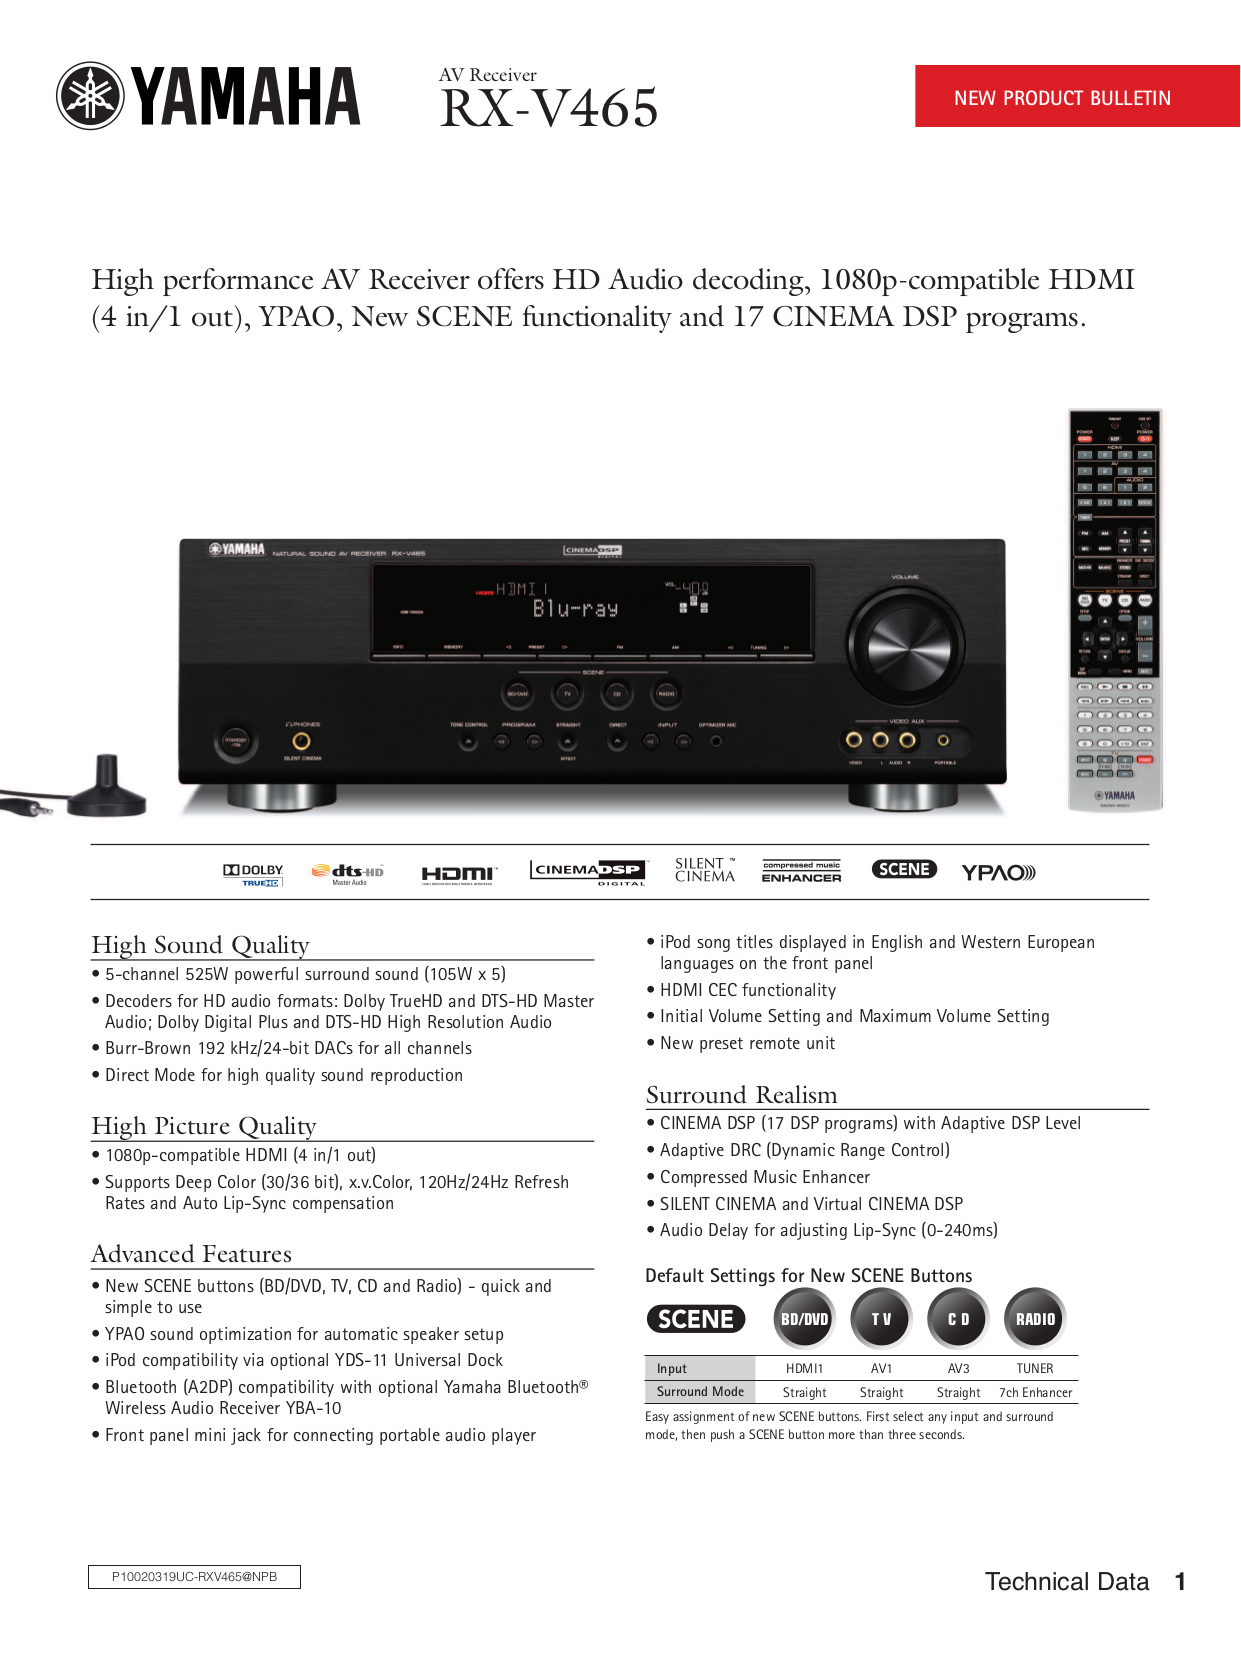 Download free pdf for Yamaha RX-V465 Receiver manual